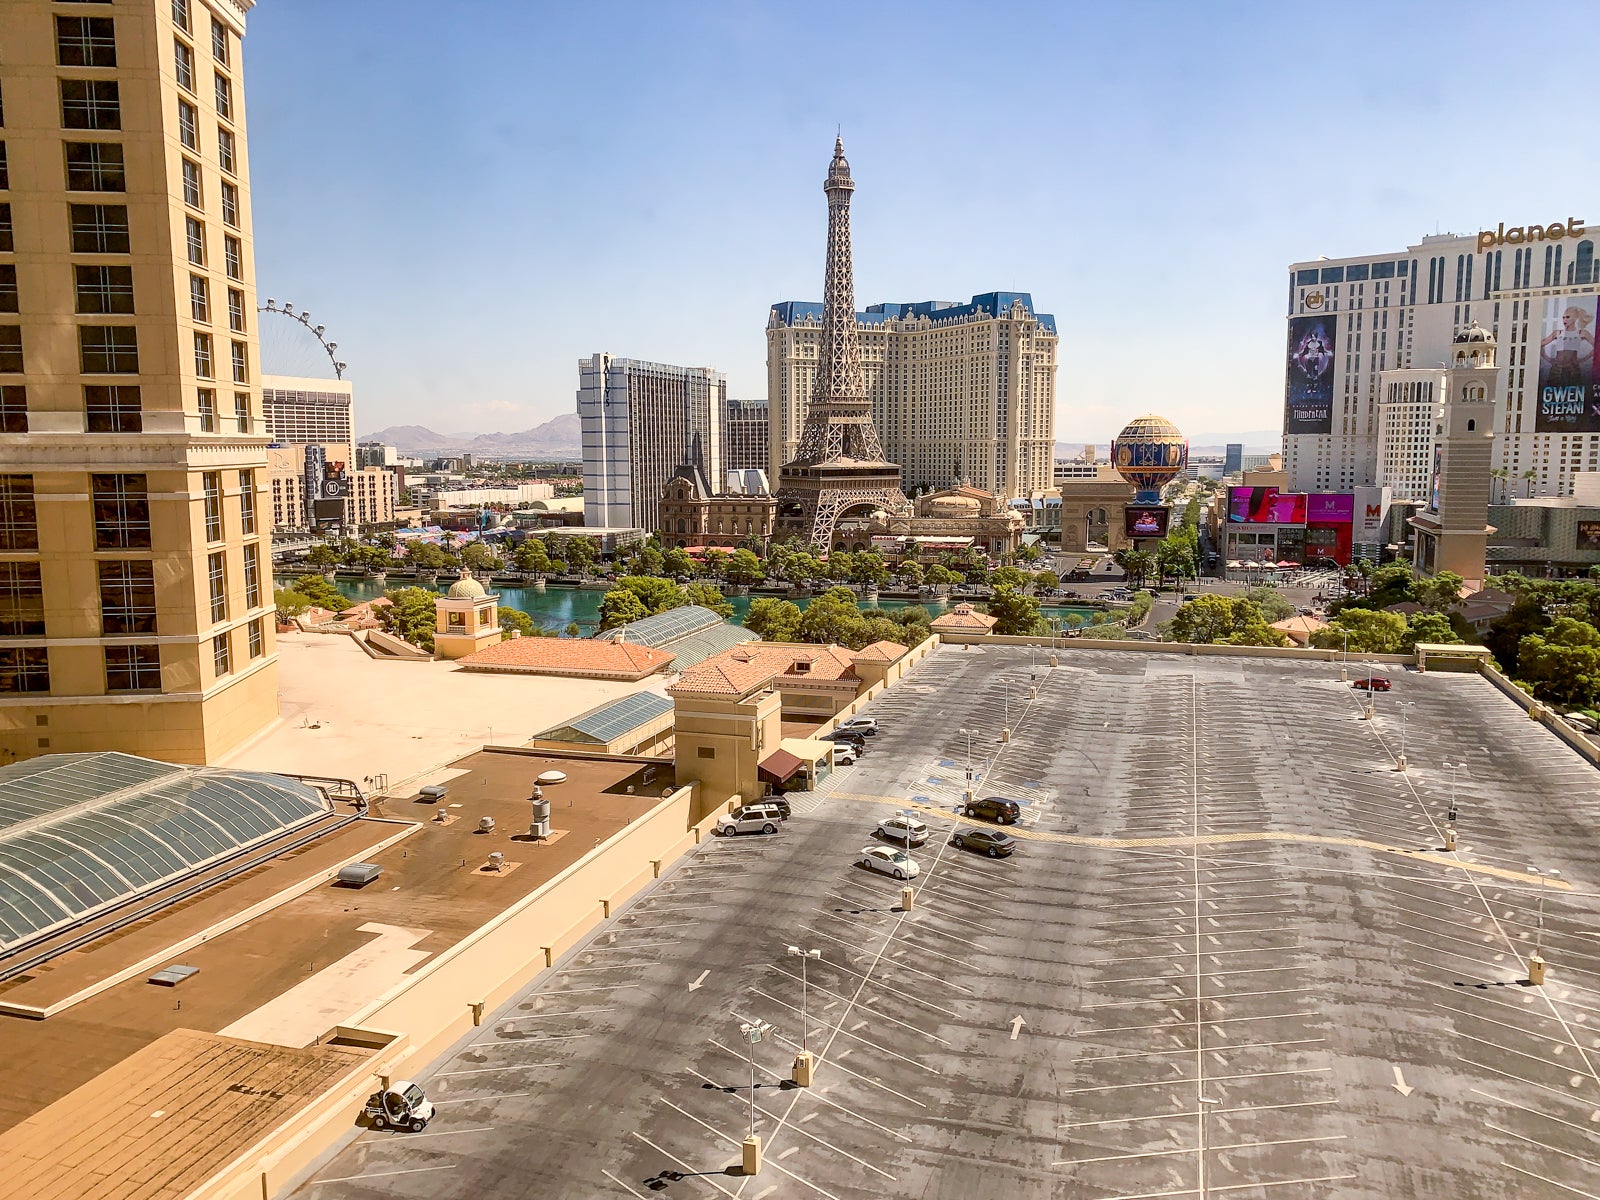 Bellagio Las Vegas Hotel Review: Virtuoso Benefits and Hyatt Points